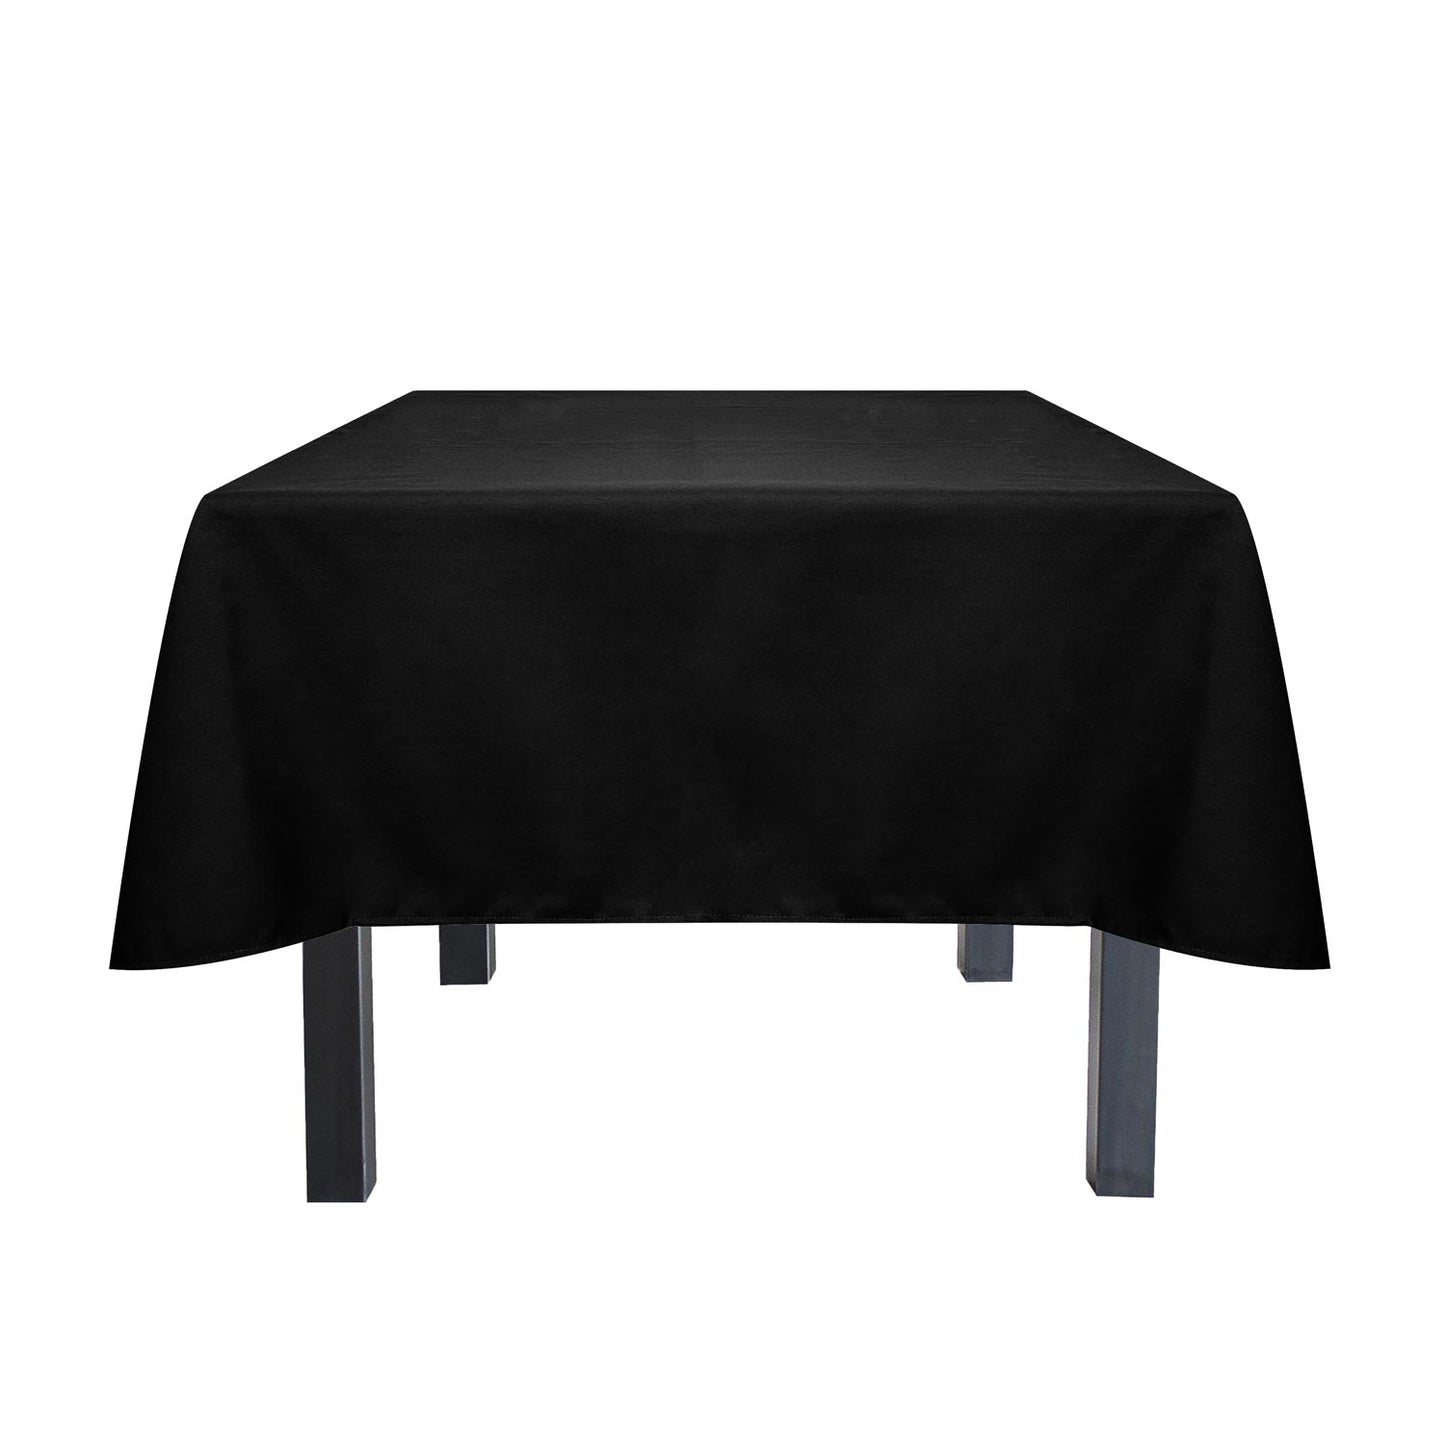 Milliken Signature Table Cloth, 62 x 62 inch, Square